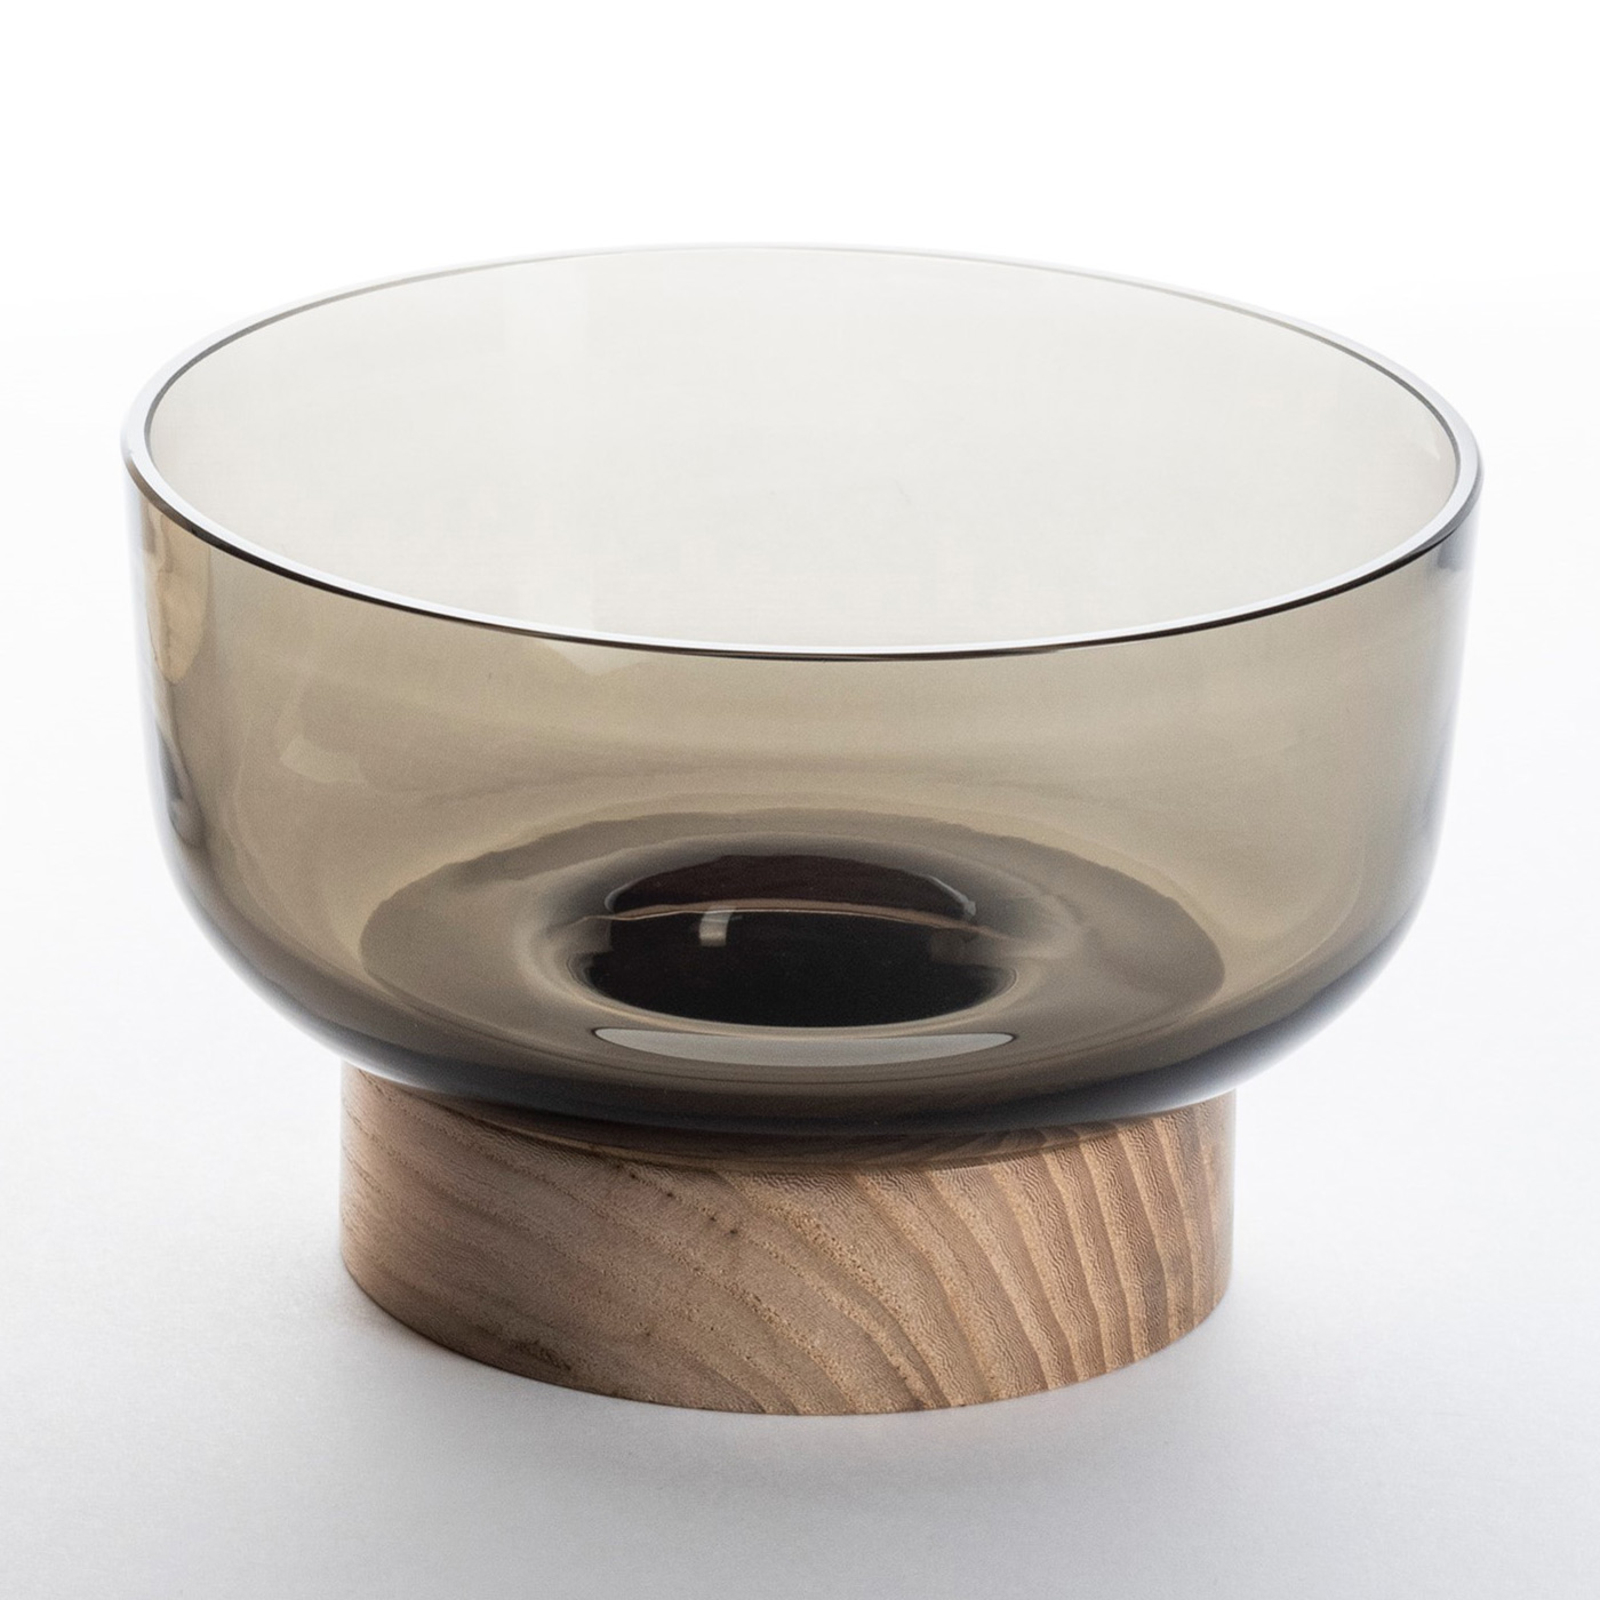 Artemide Bontà glass bowl with wooden base, grey